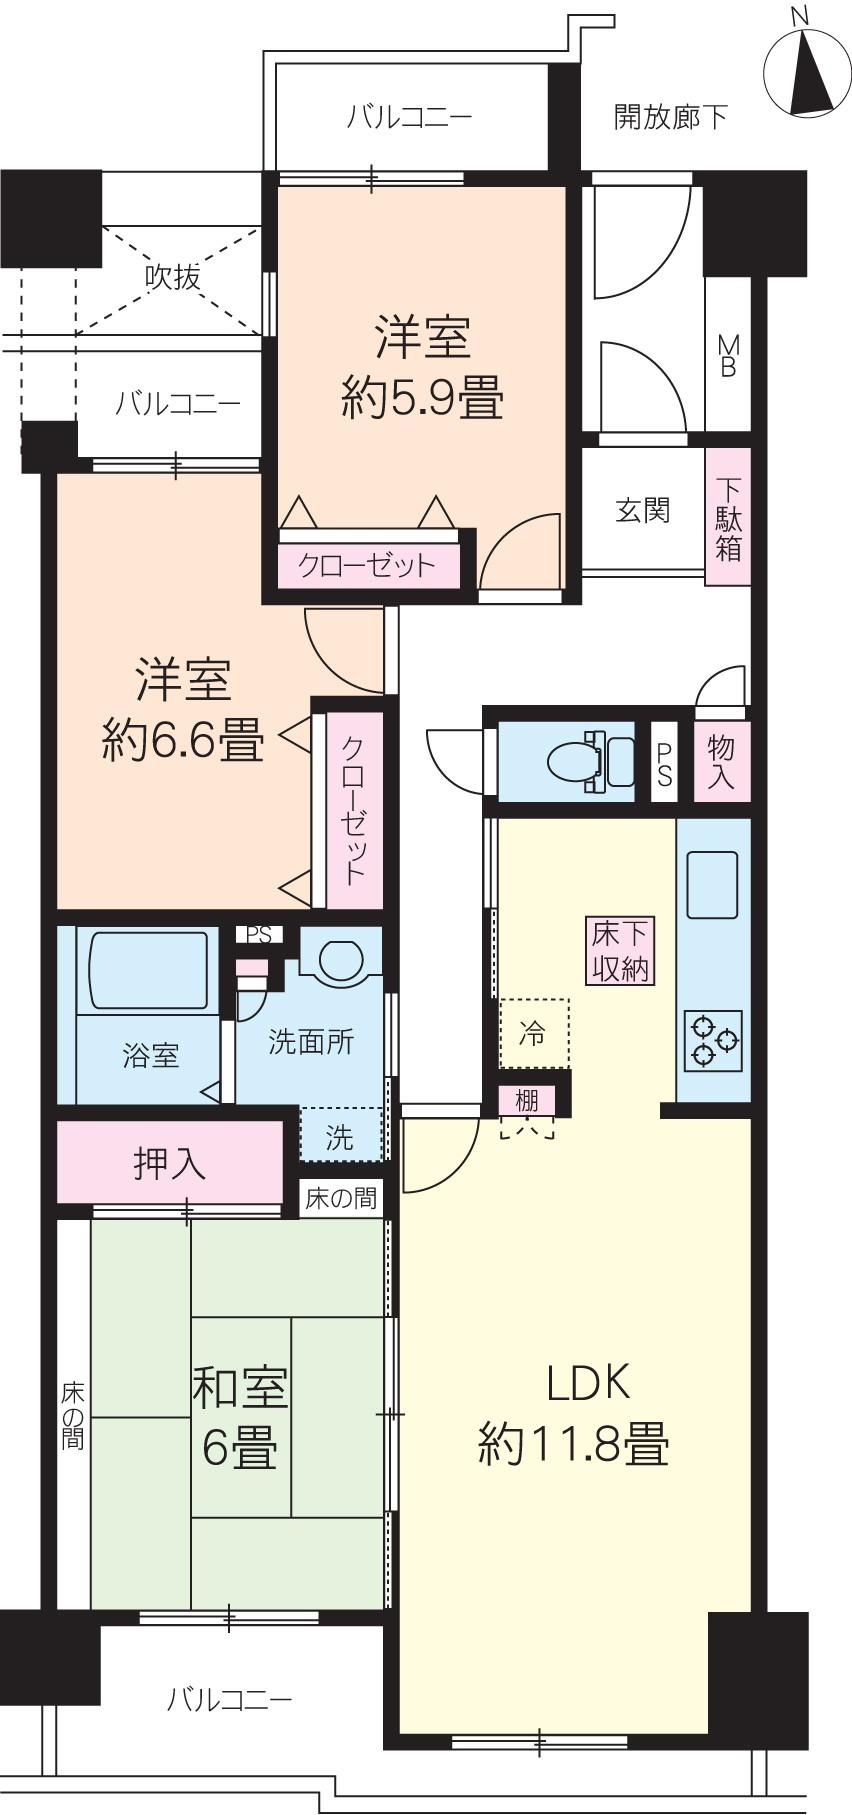 Floor plan. 3LDK, Price 11.3 million yen, Occupied area 79.29 sq m , Balcony area 11.86 sq m